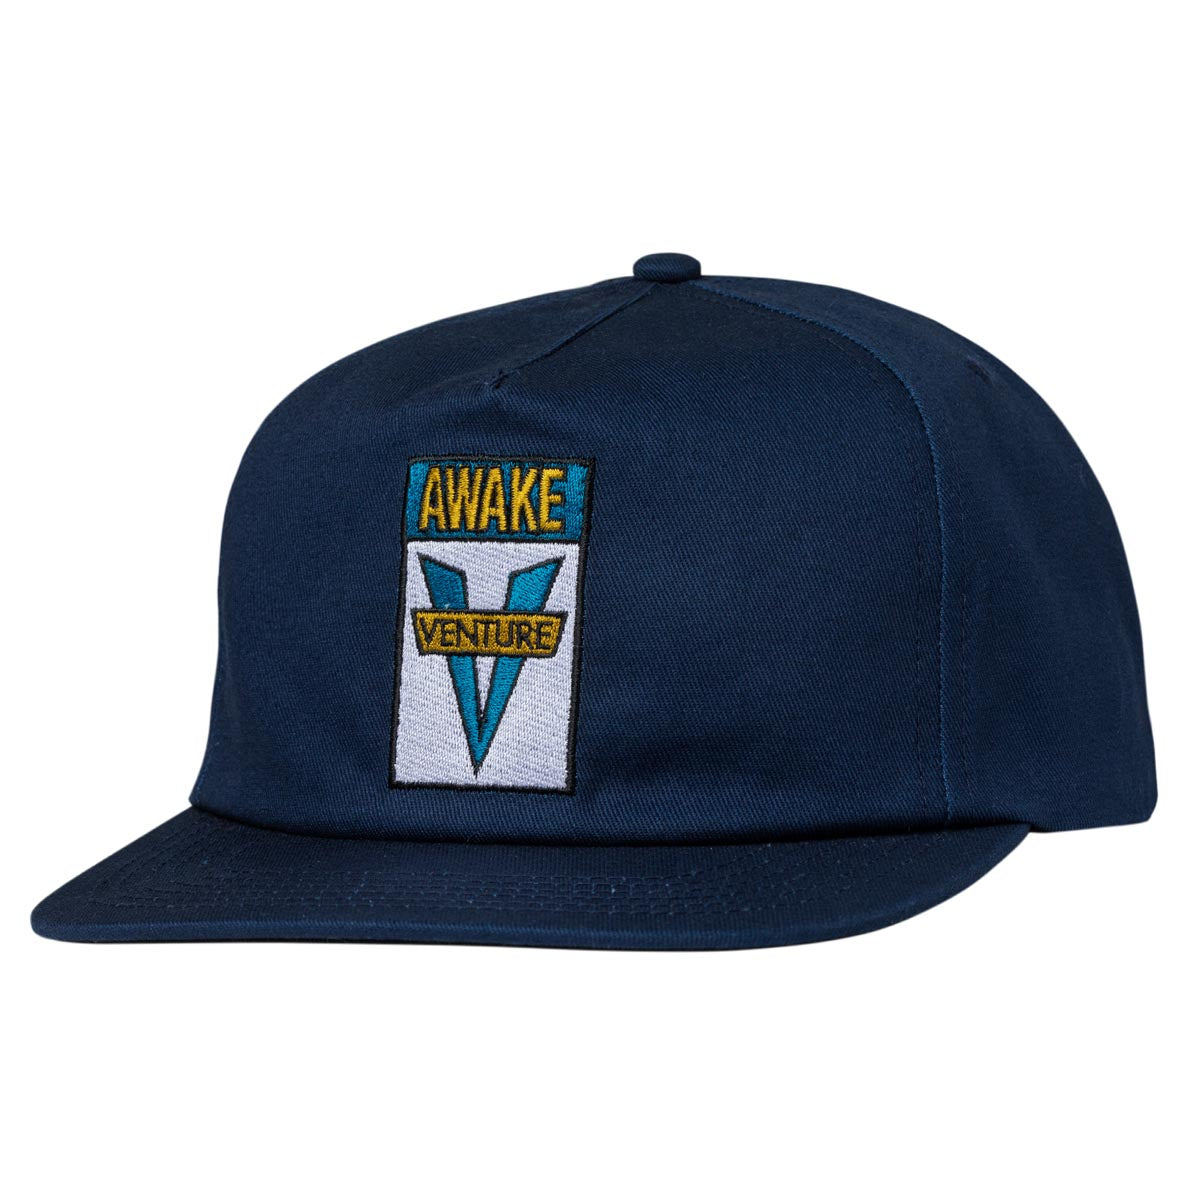 Venture Awake Snapback Hat - Navy/Teal/Gold image 1